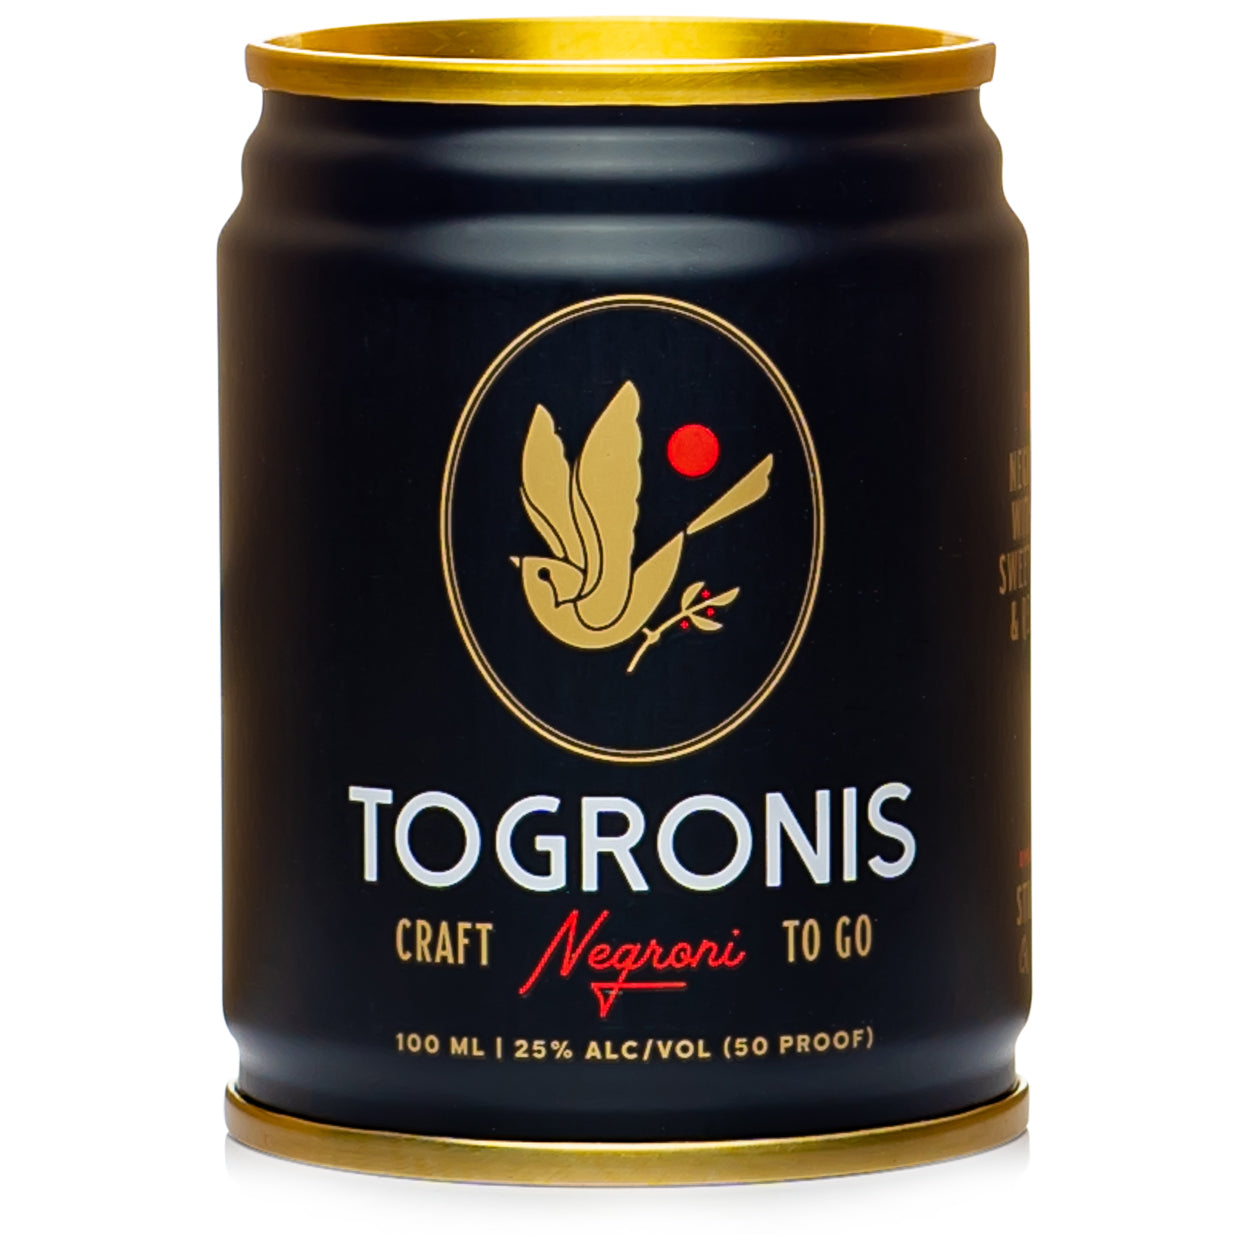 Togronis Craft Negroni Cocktail